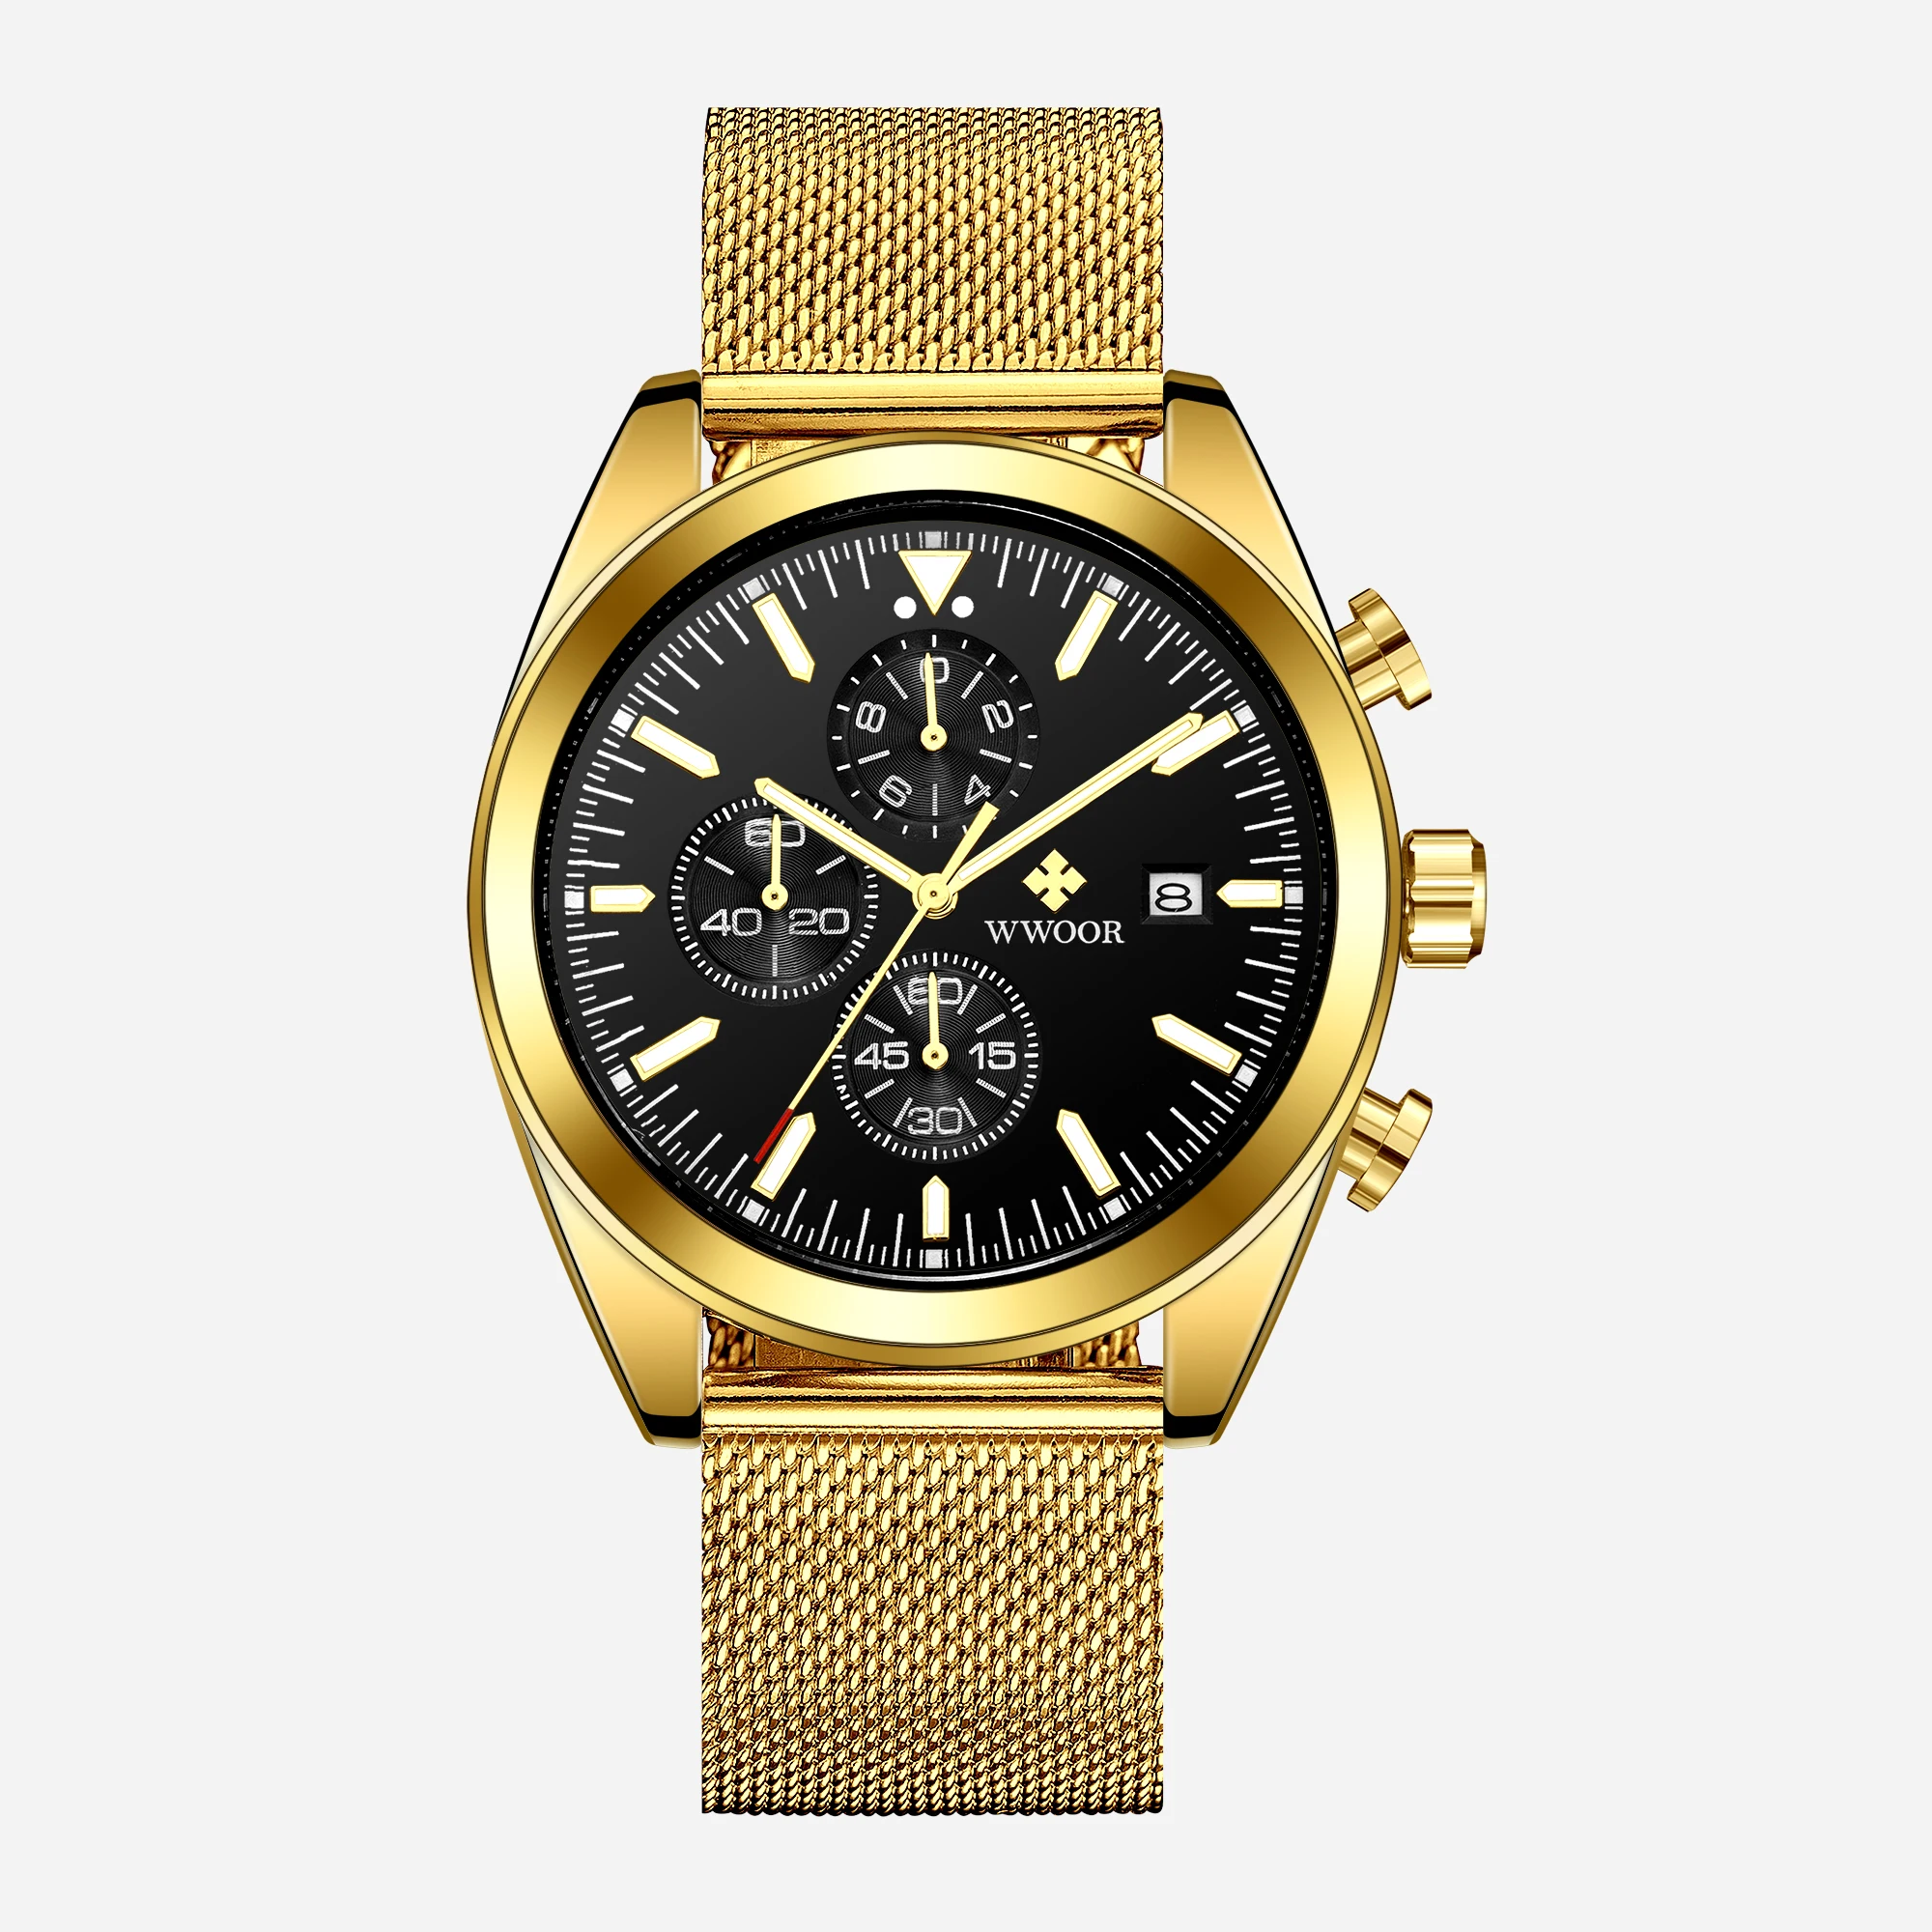 
WWOOR 8838 Chronograph Watch Men Quartz Wristwatch Blue Sports Leather Watches 